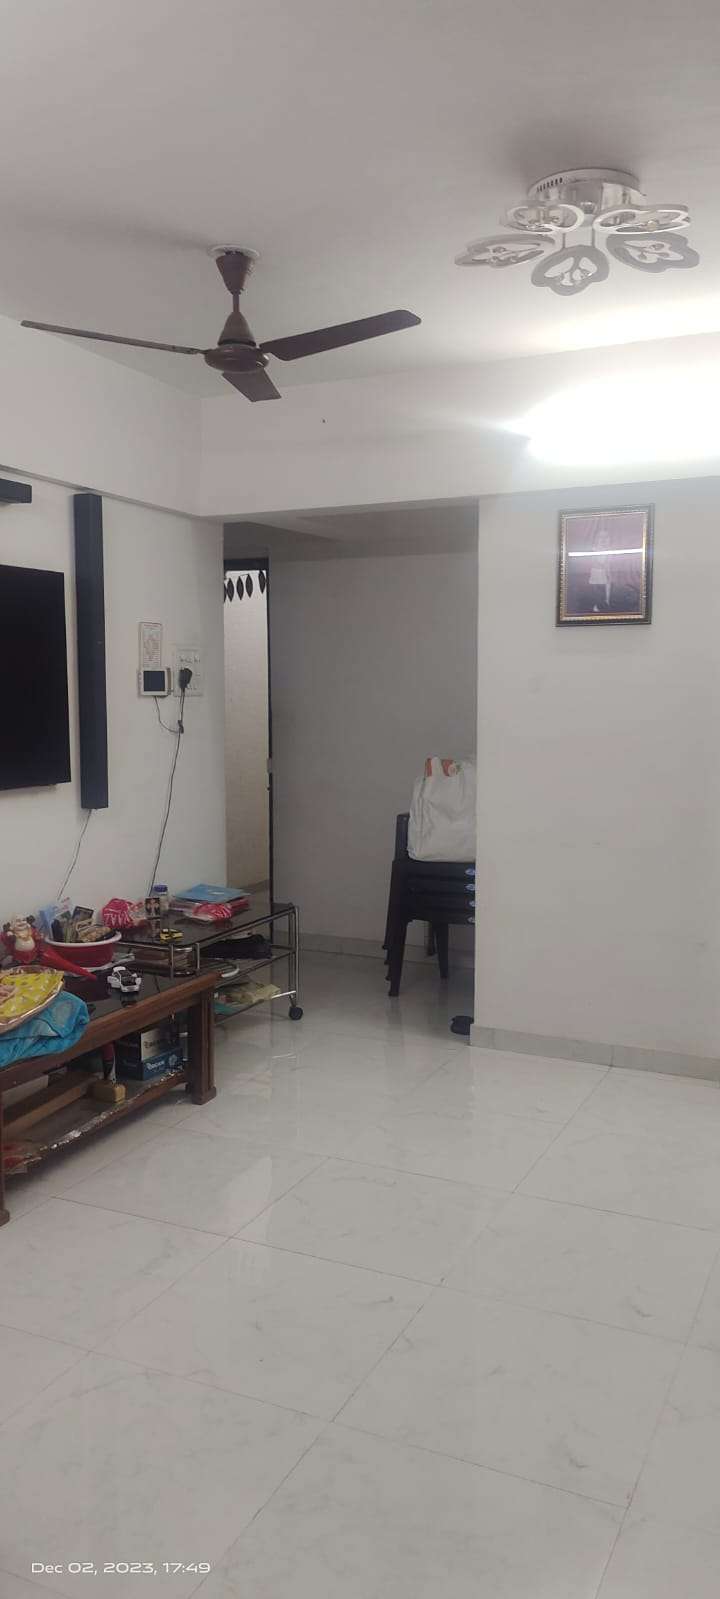 2 Bedroom 600 Sq.Ft. Apartment in Mira Road Mumbai